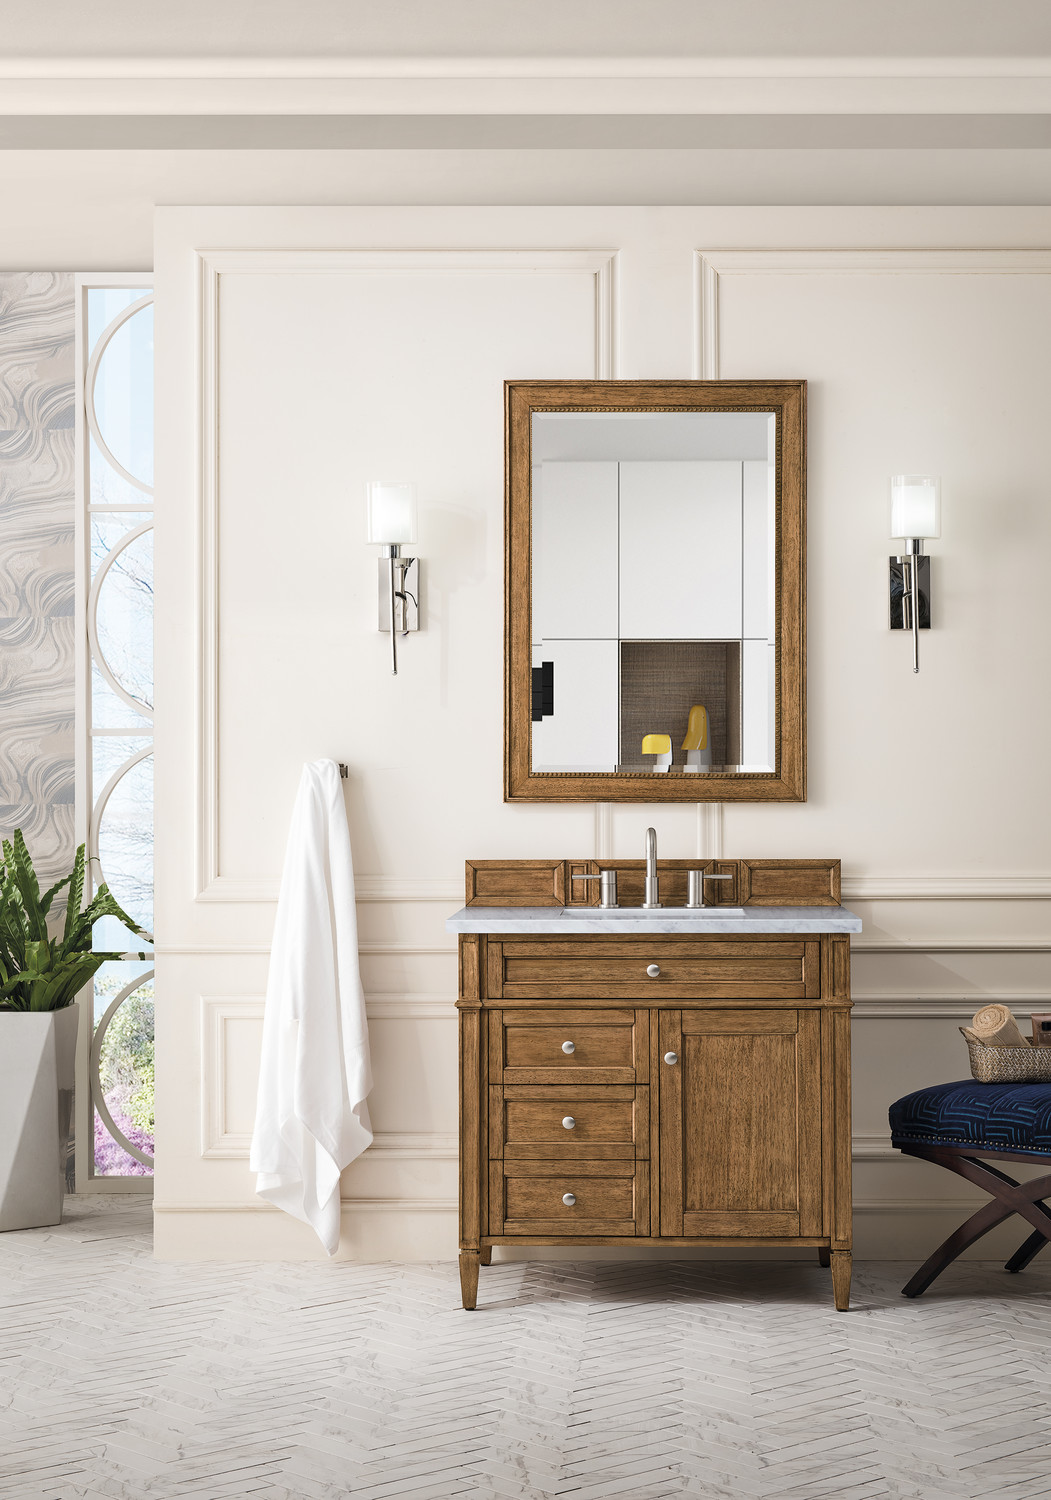 single sink bathroom vanity 30 inch James Martin Vanity Saddle Brown Transitional